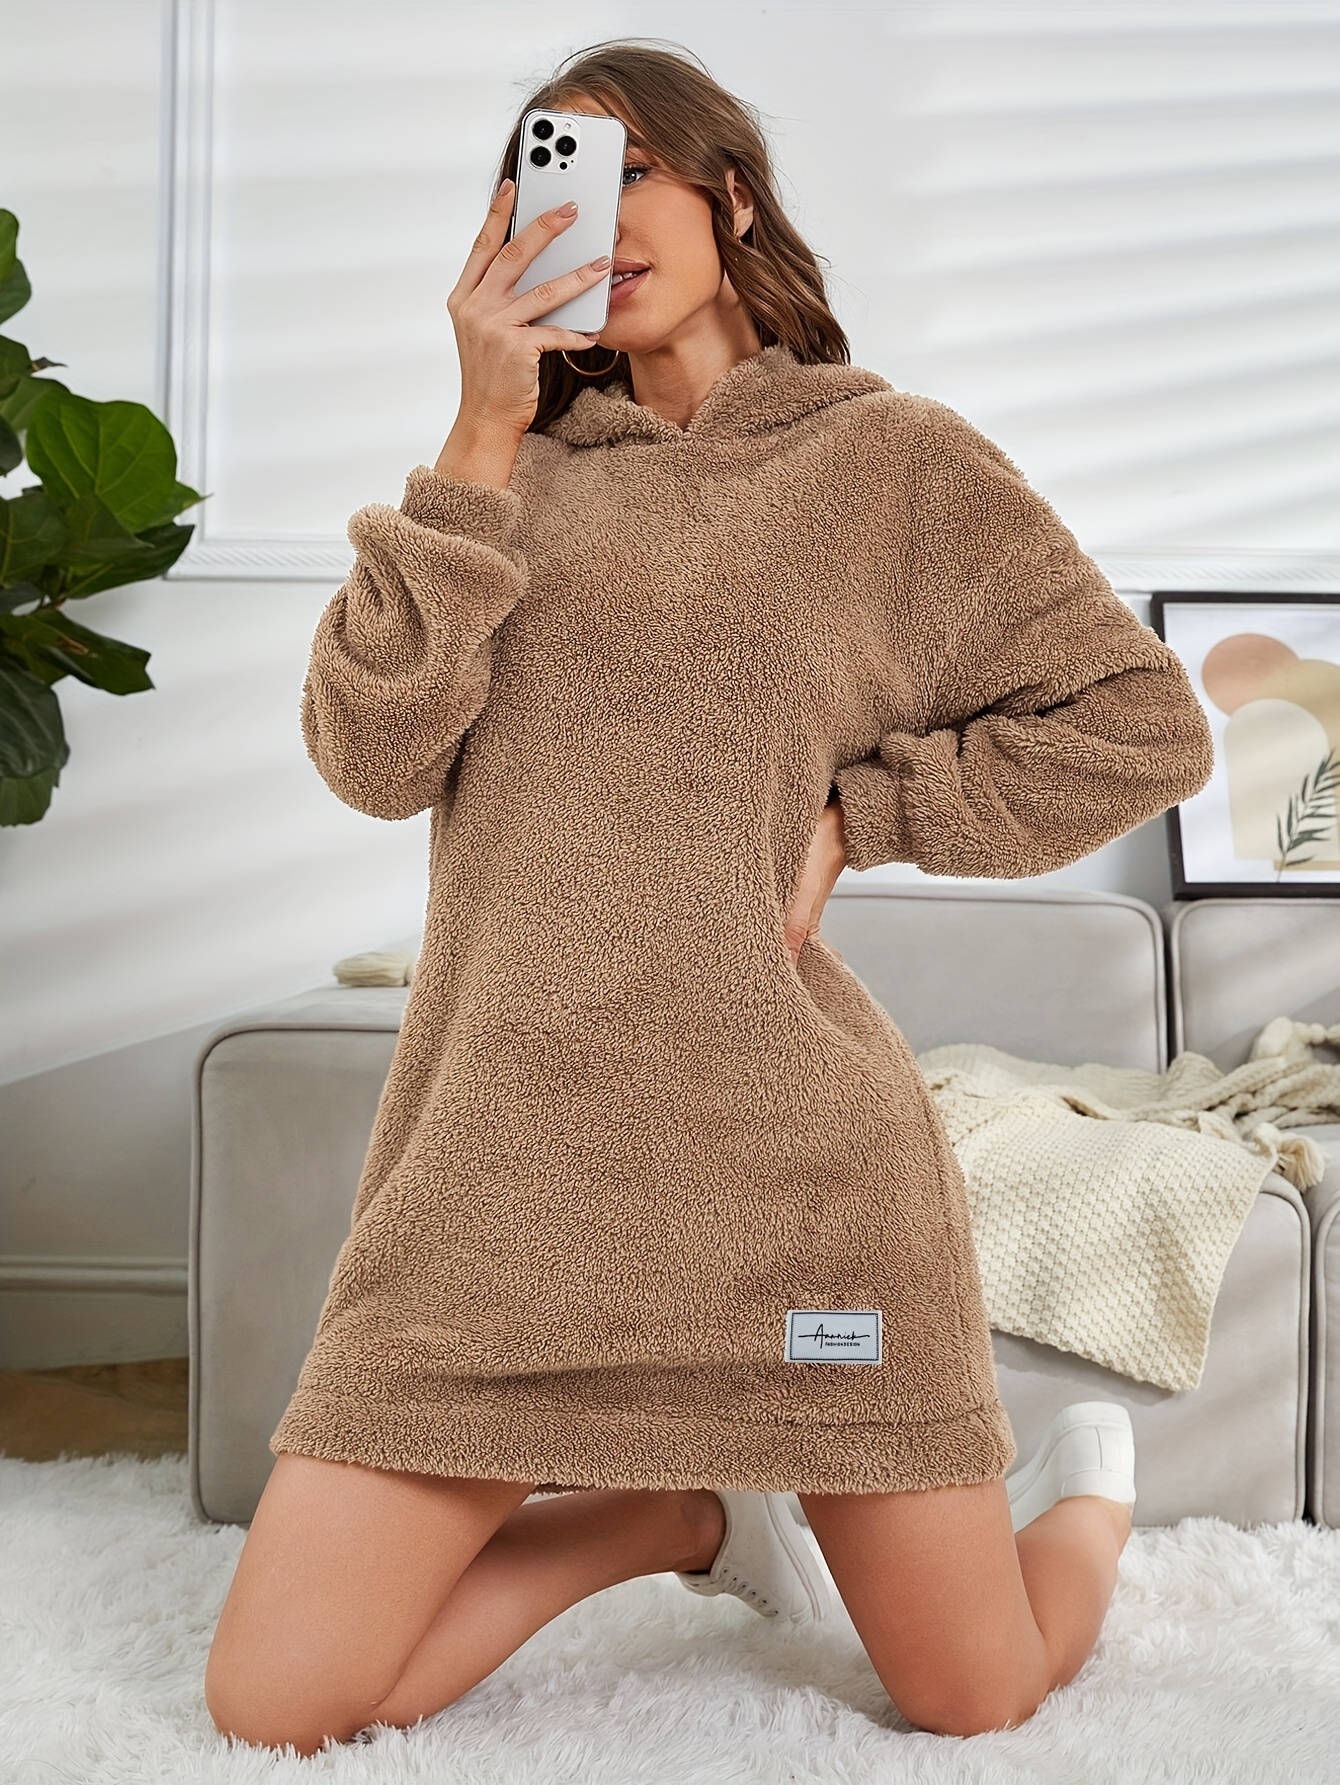 hooded teddy dress, hooded teddy dress casual long sleeve simple warm dress womens clothing details 35